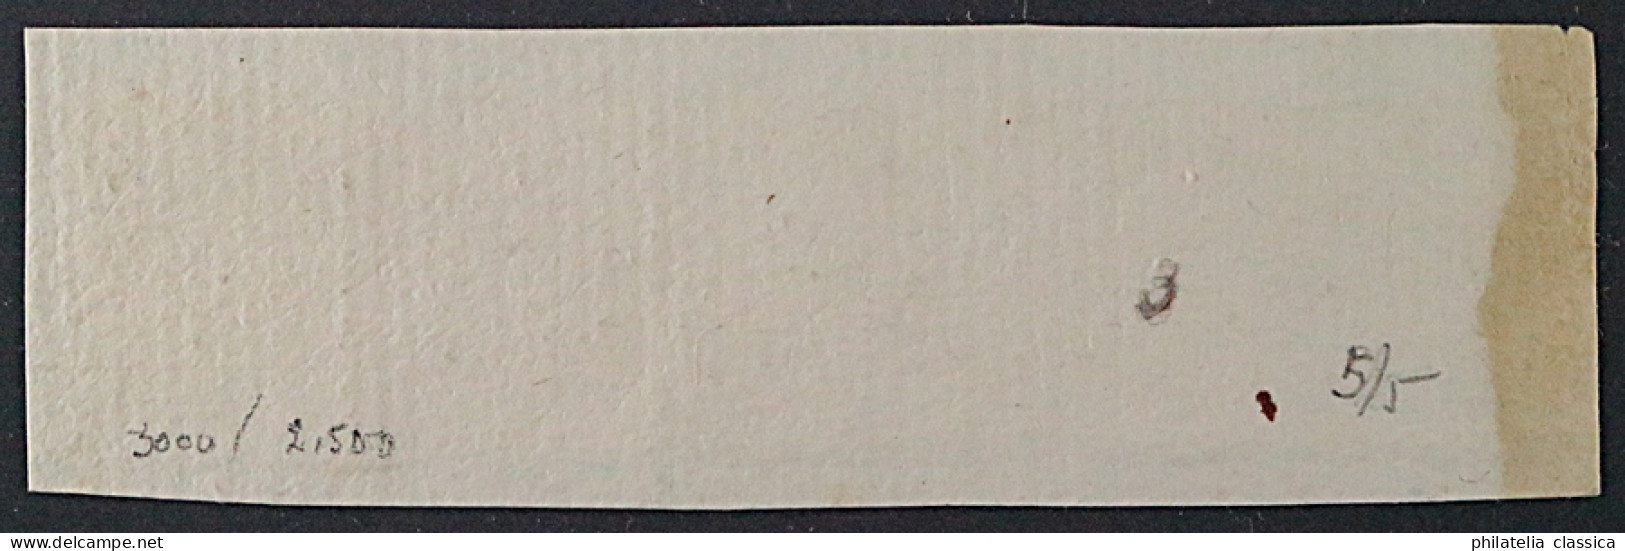 Lombardei  3 (4) + 5 Y Briefstück Mit 4 X 15 Cmi. Und 45 Cmi. Maschinenpapier - Lombardo-Venetien